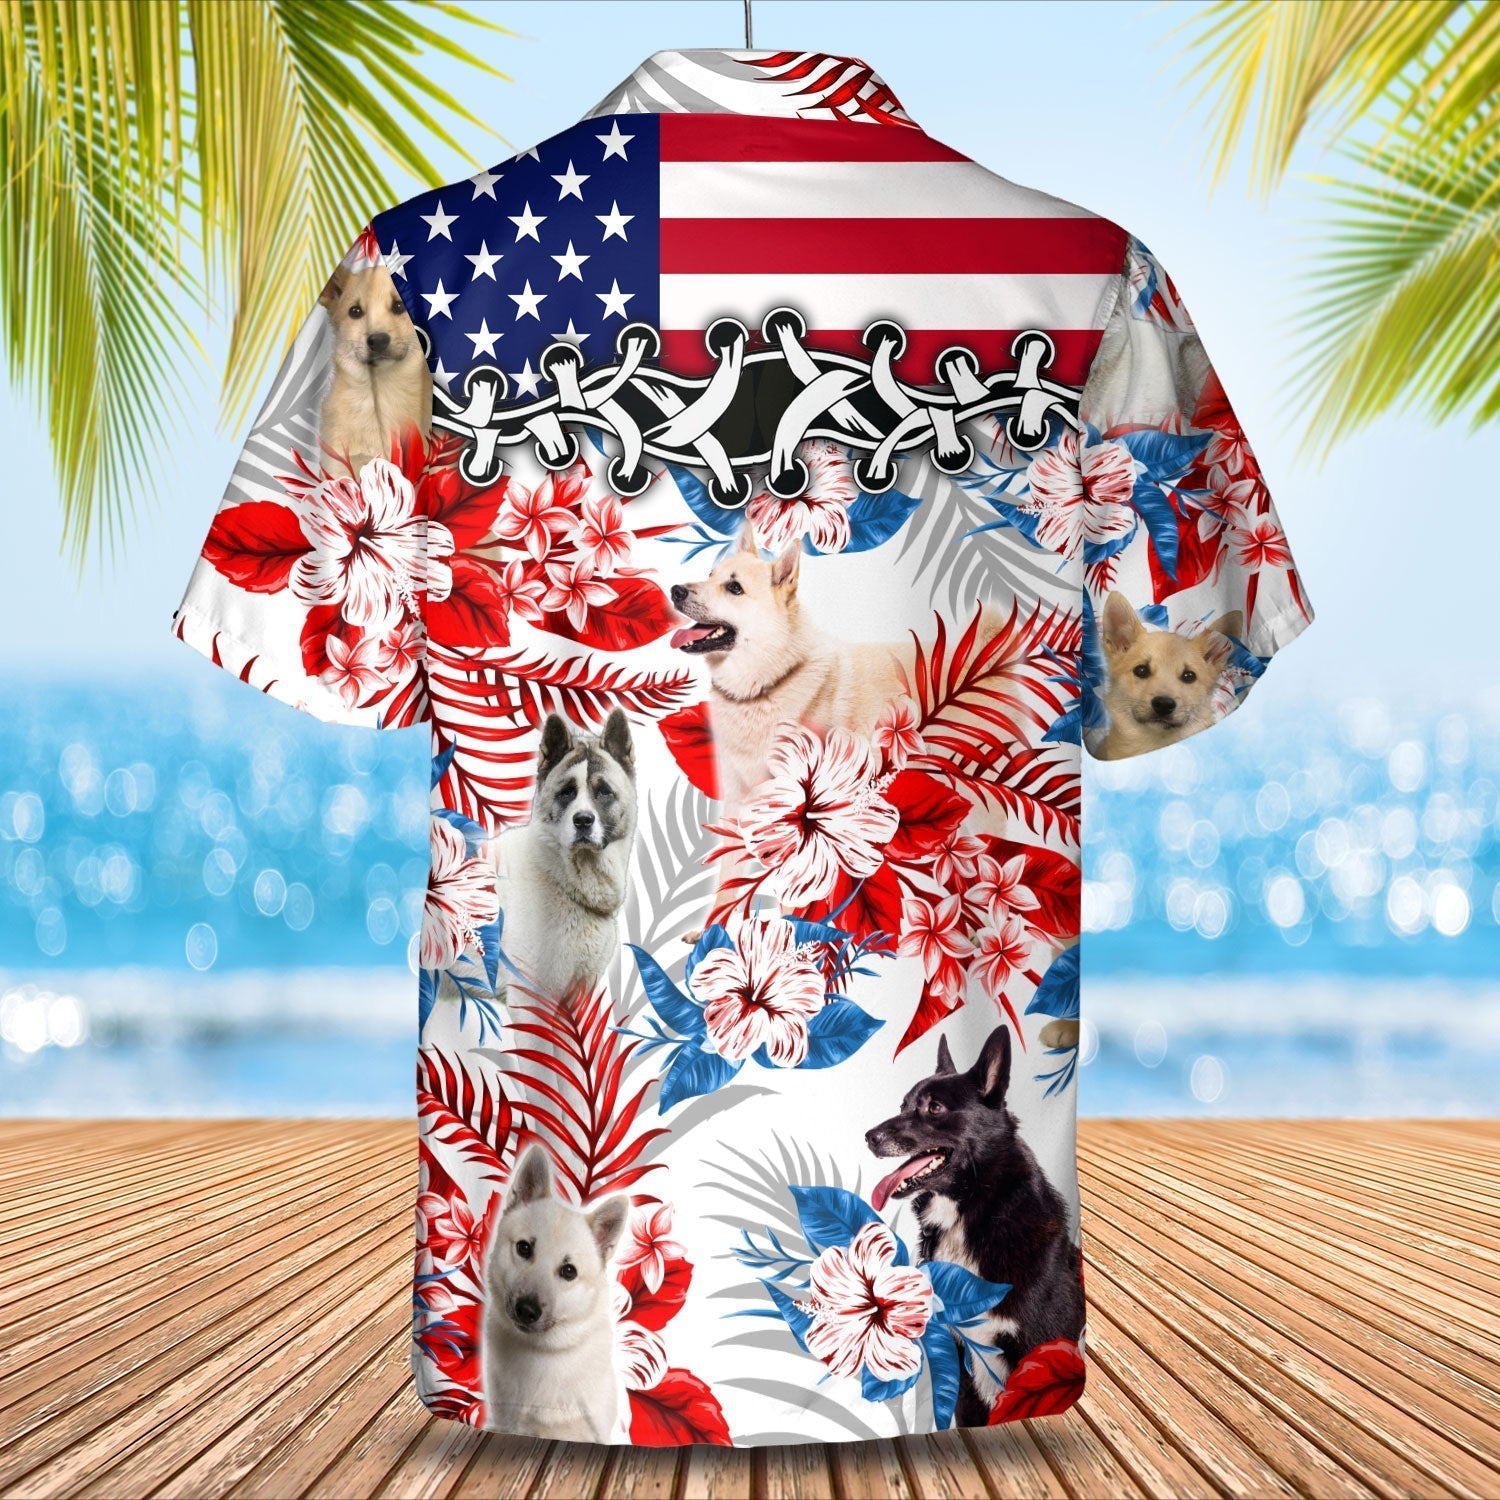 Norwegian Buhund Hawaiian Shirt - Summer aloha shirt/ Hawaiian shirt for Men and women